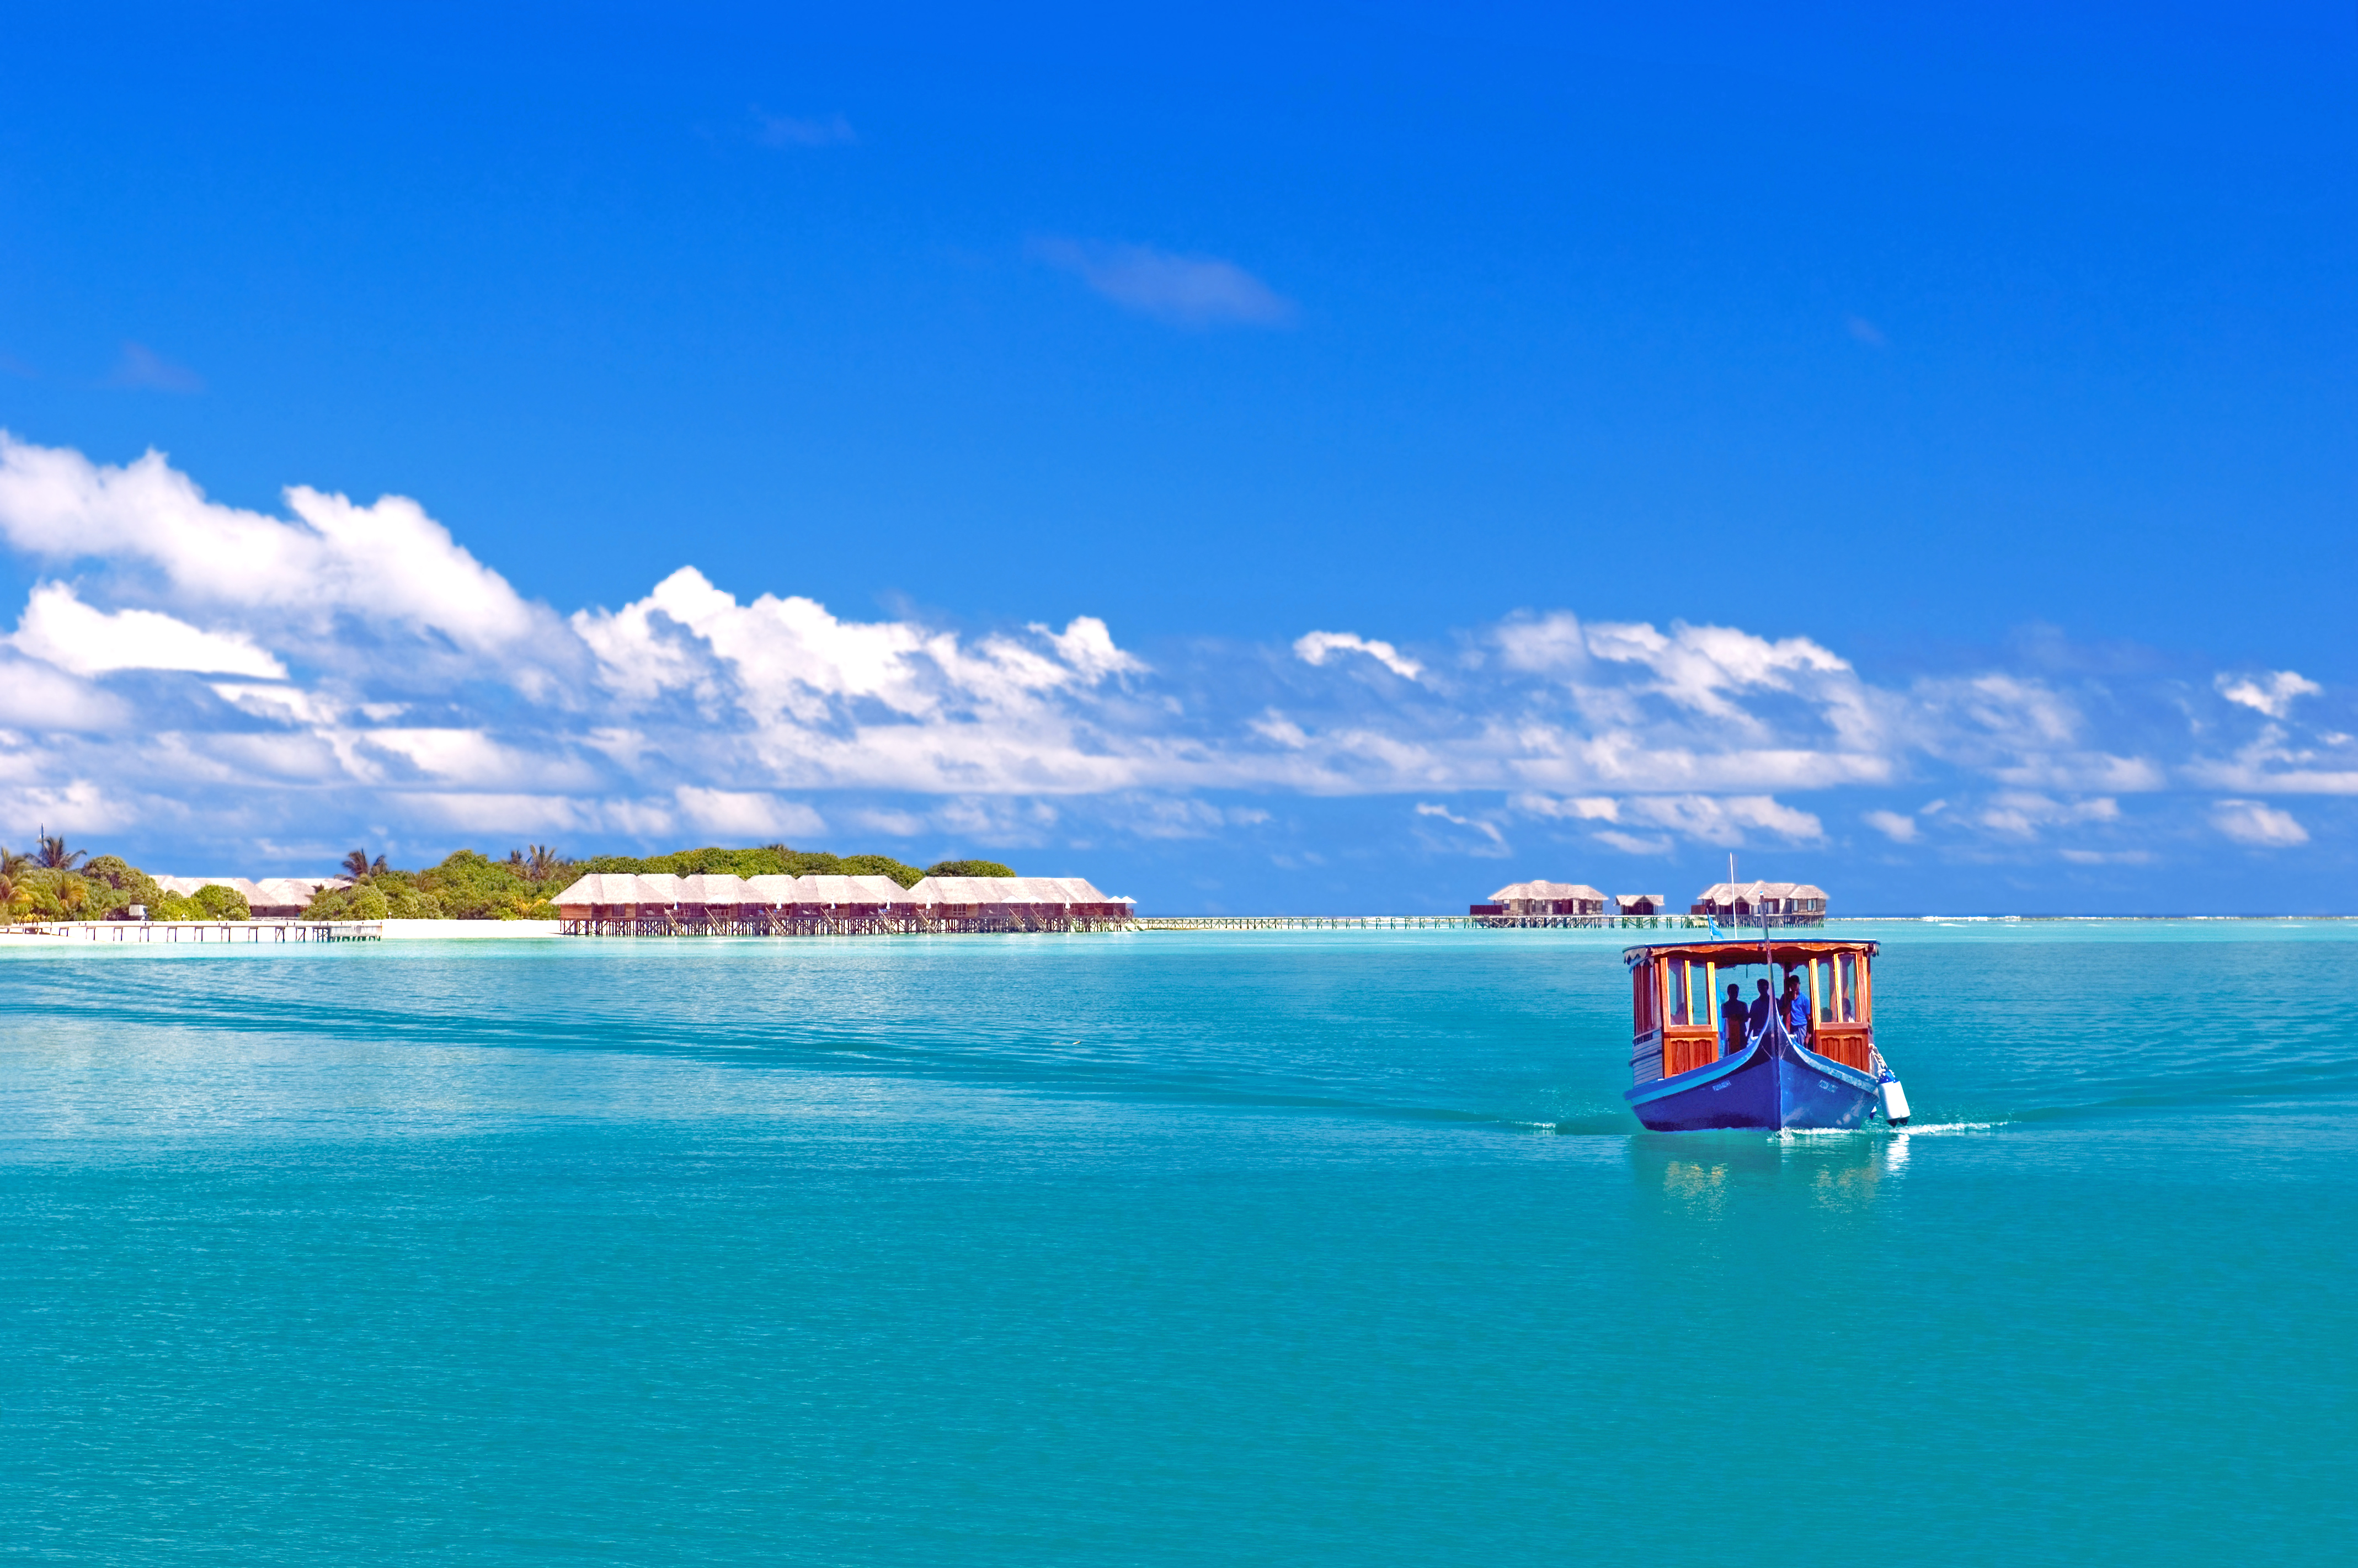 Boat island. Фрипорт Багамы. Нассау (Багамские острова). Нассау, Багамские острова бунгало. Парадиз остров Карибского моря.